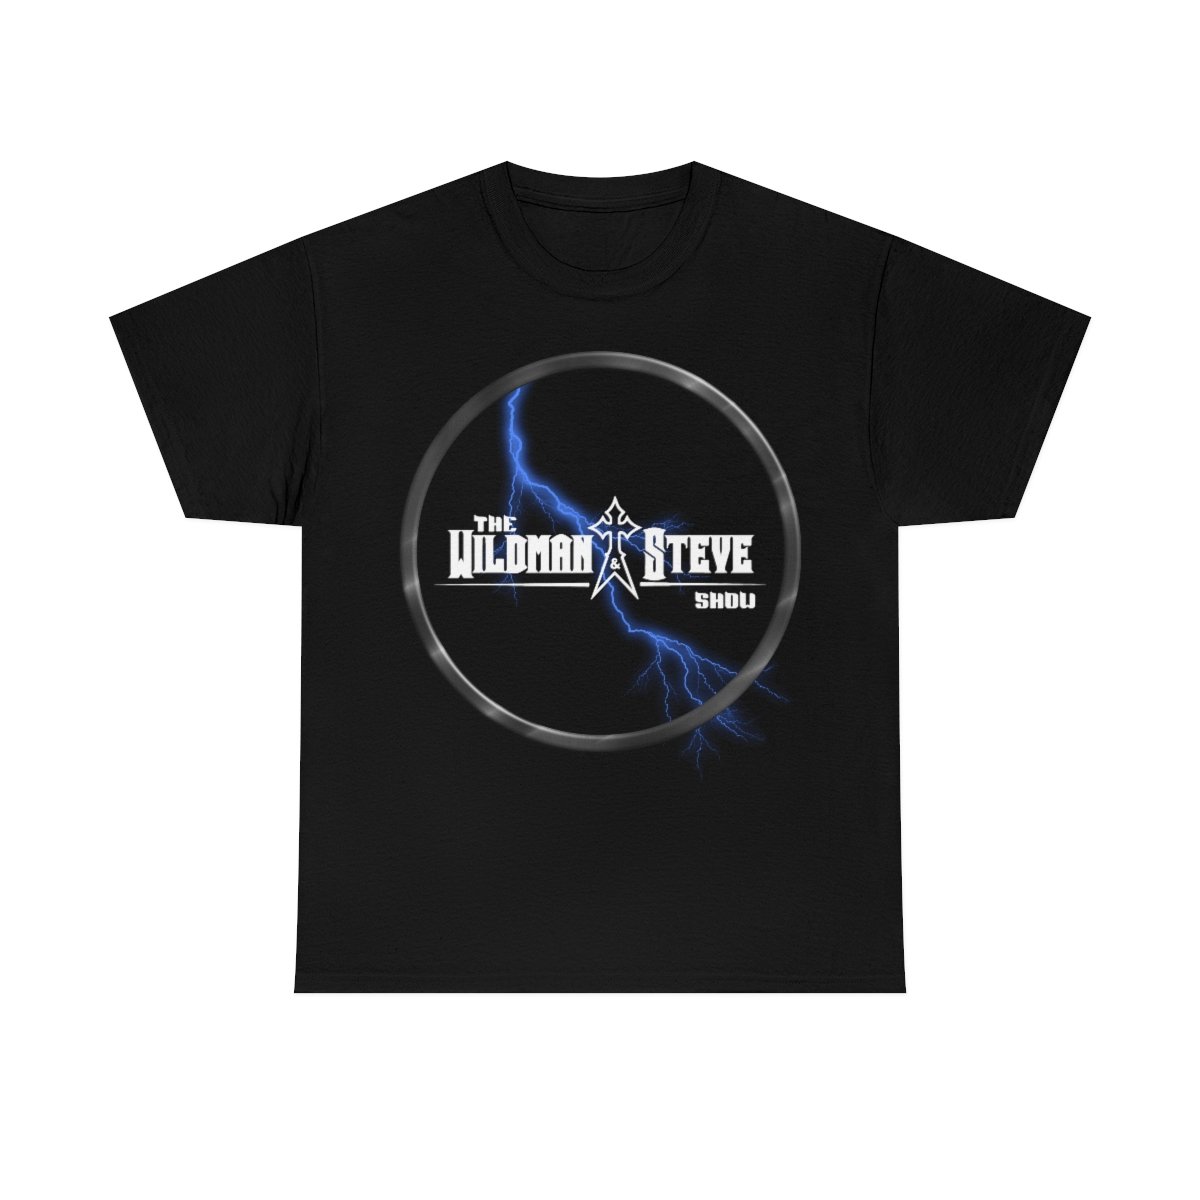 The Wildman and Steve Show – Blue Lightning Short Sleeve Tshirt (5000)